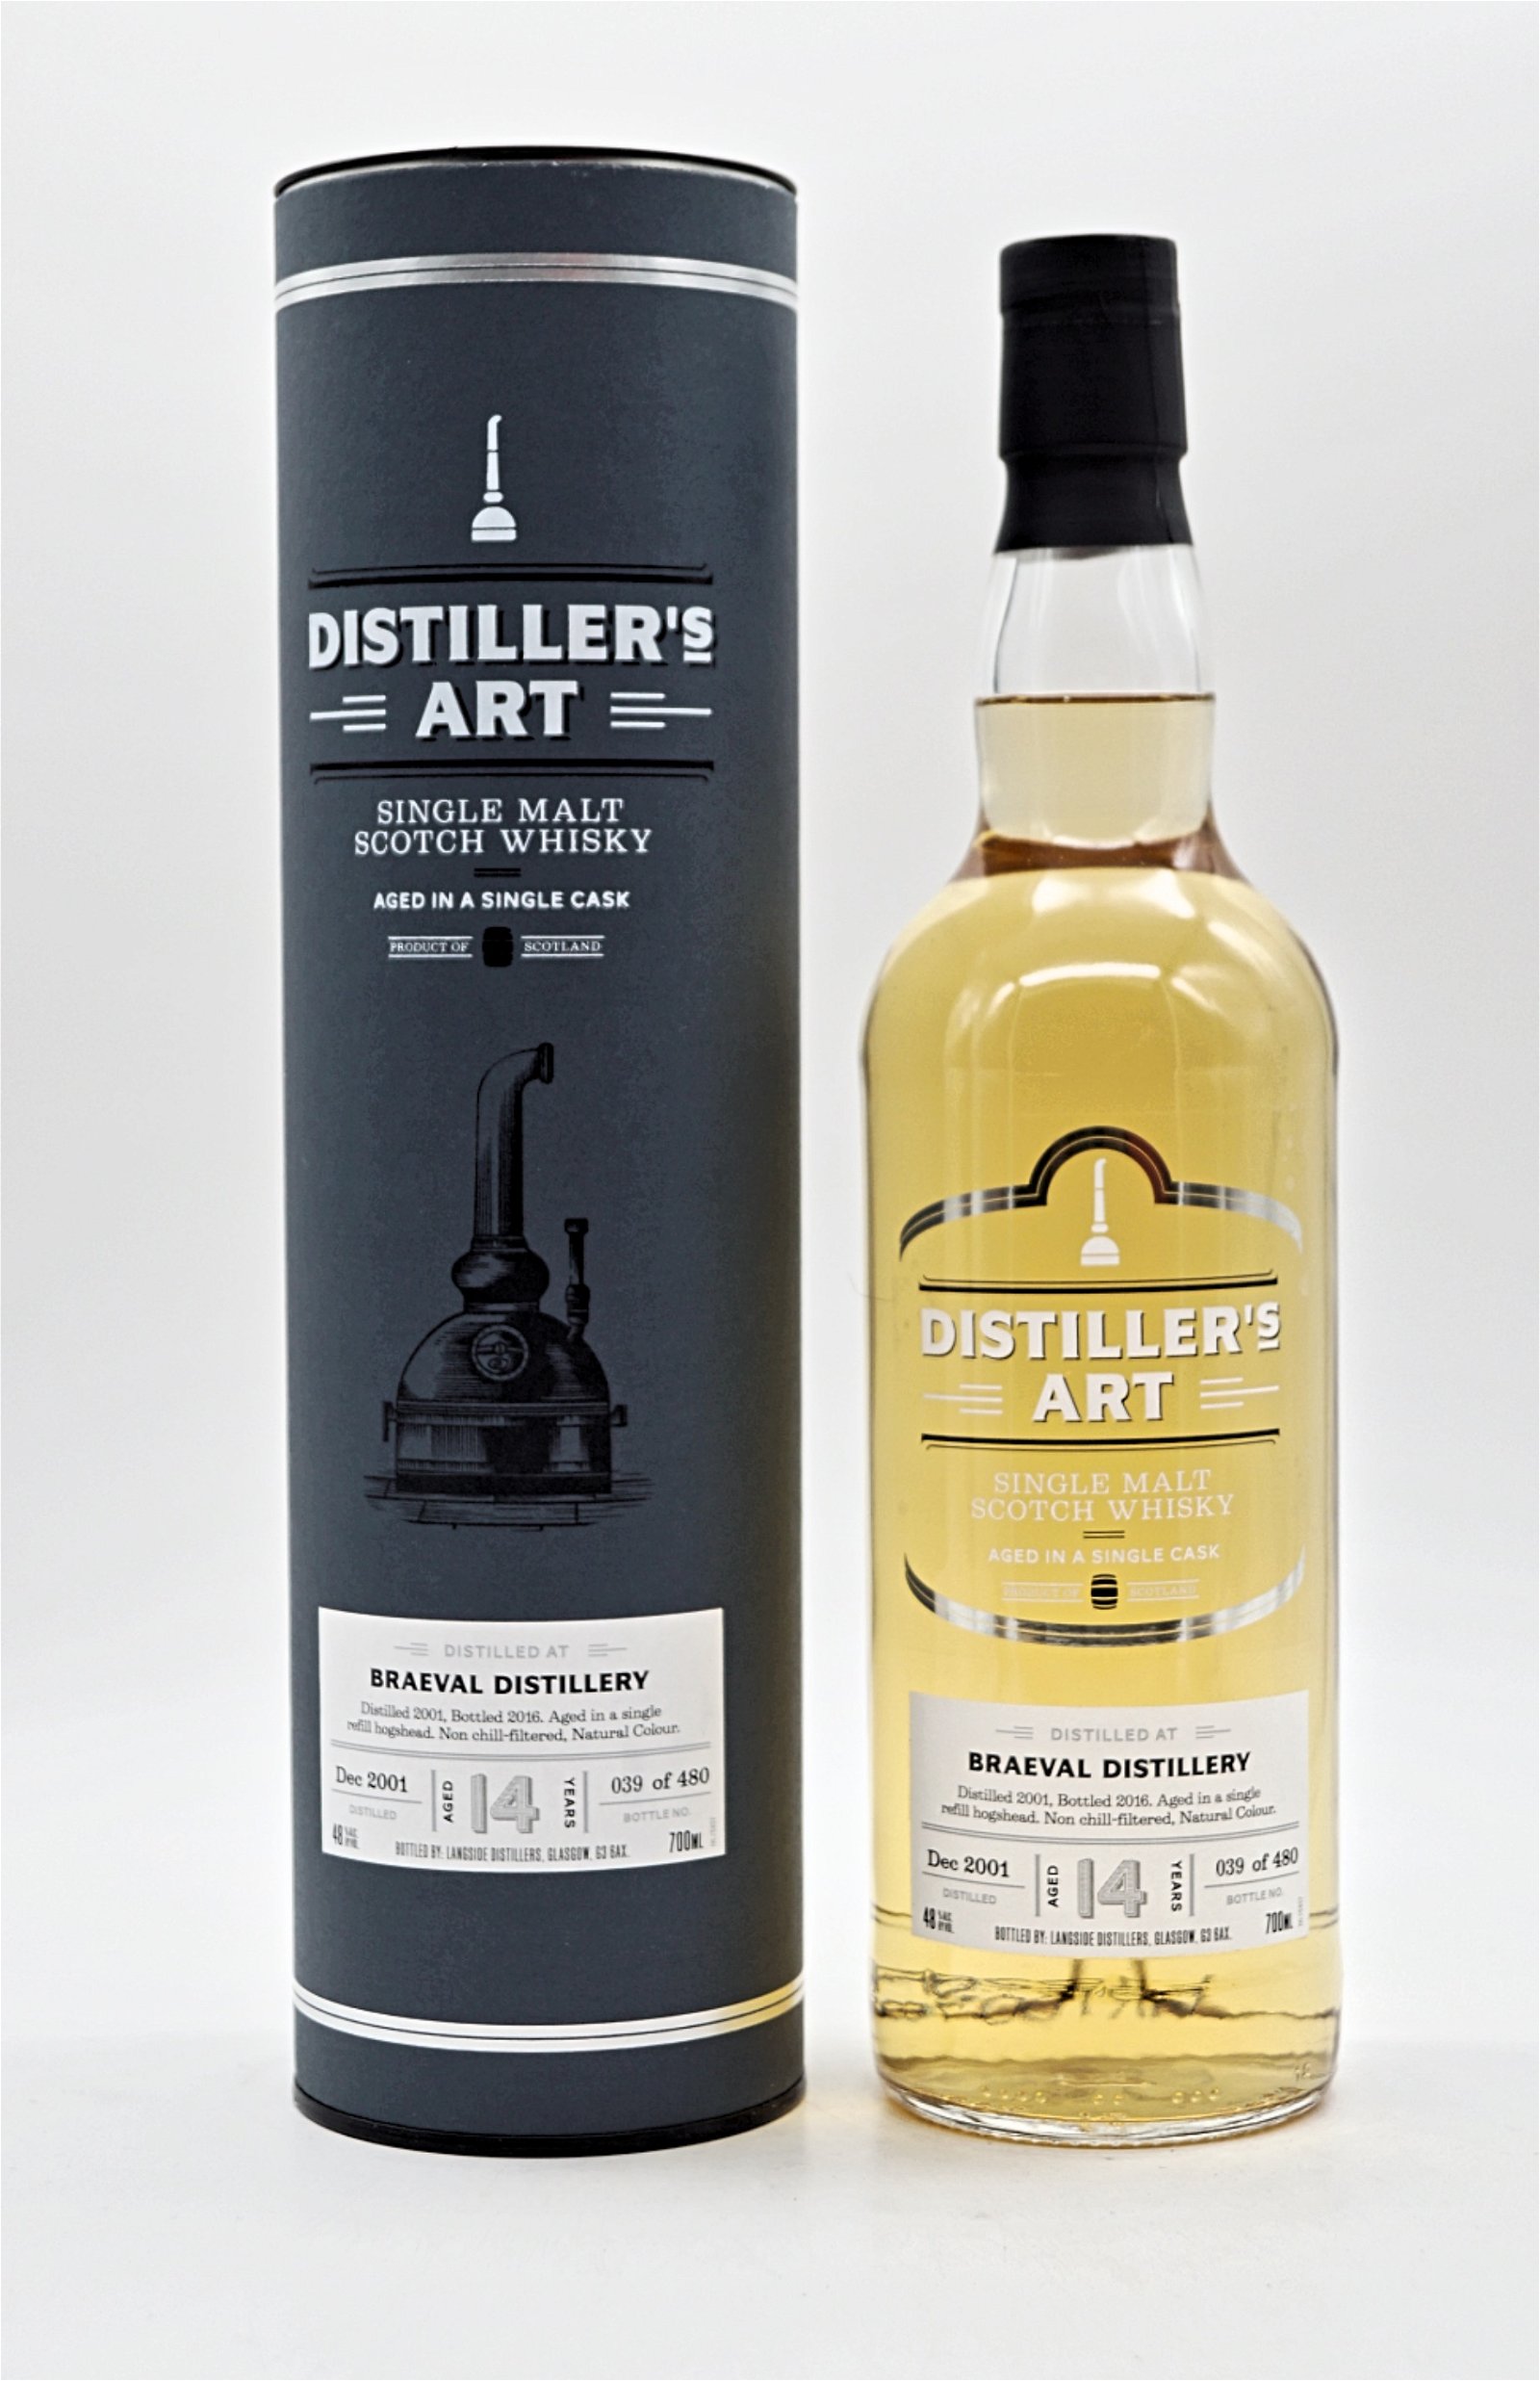 Distillers Art Braeval Distillery 14 Jahre 48% 480 Fl. Single Cask Single Malt Scotch Whisky